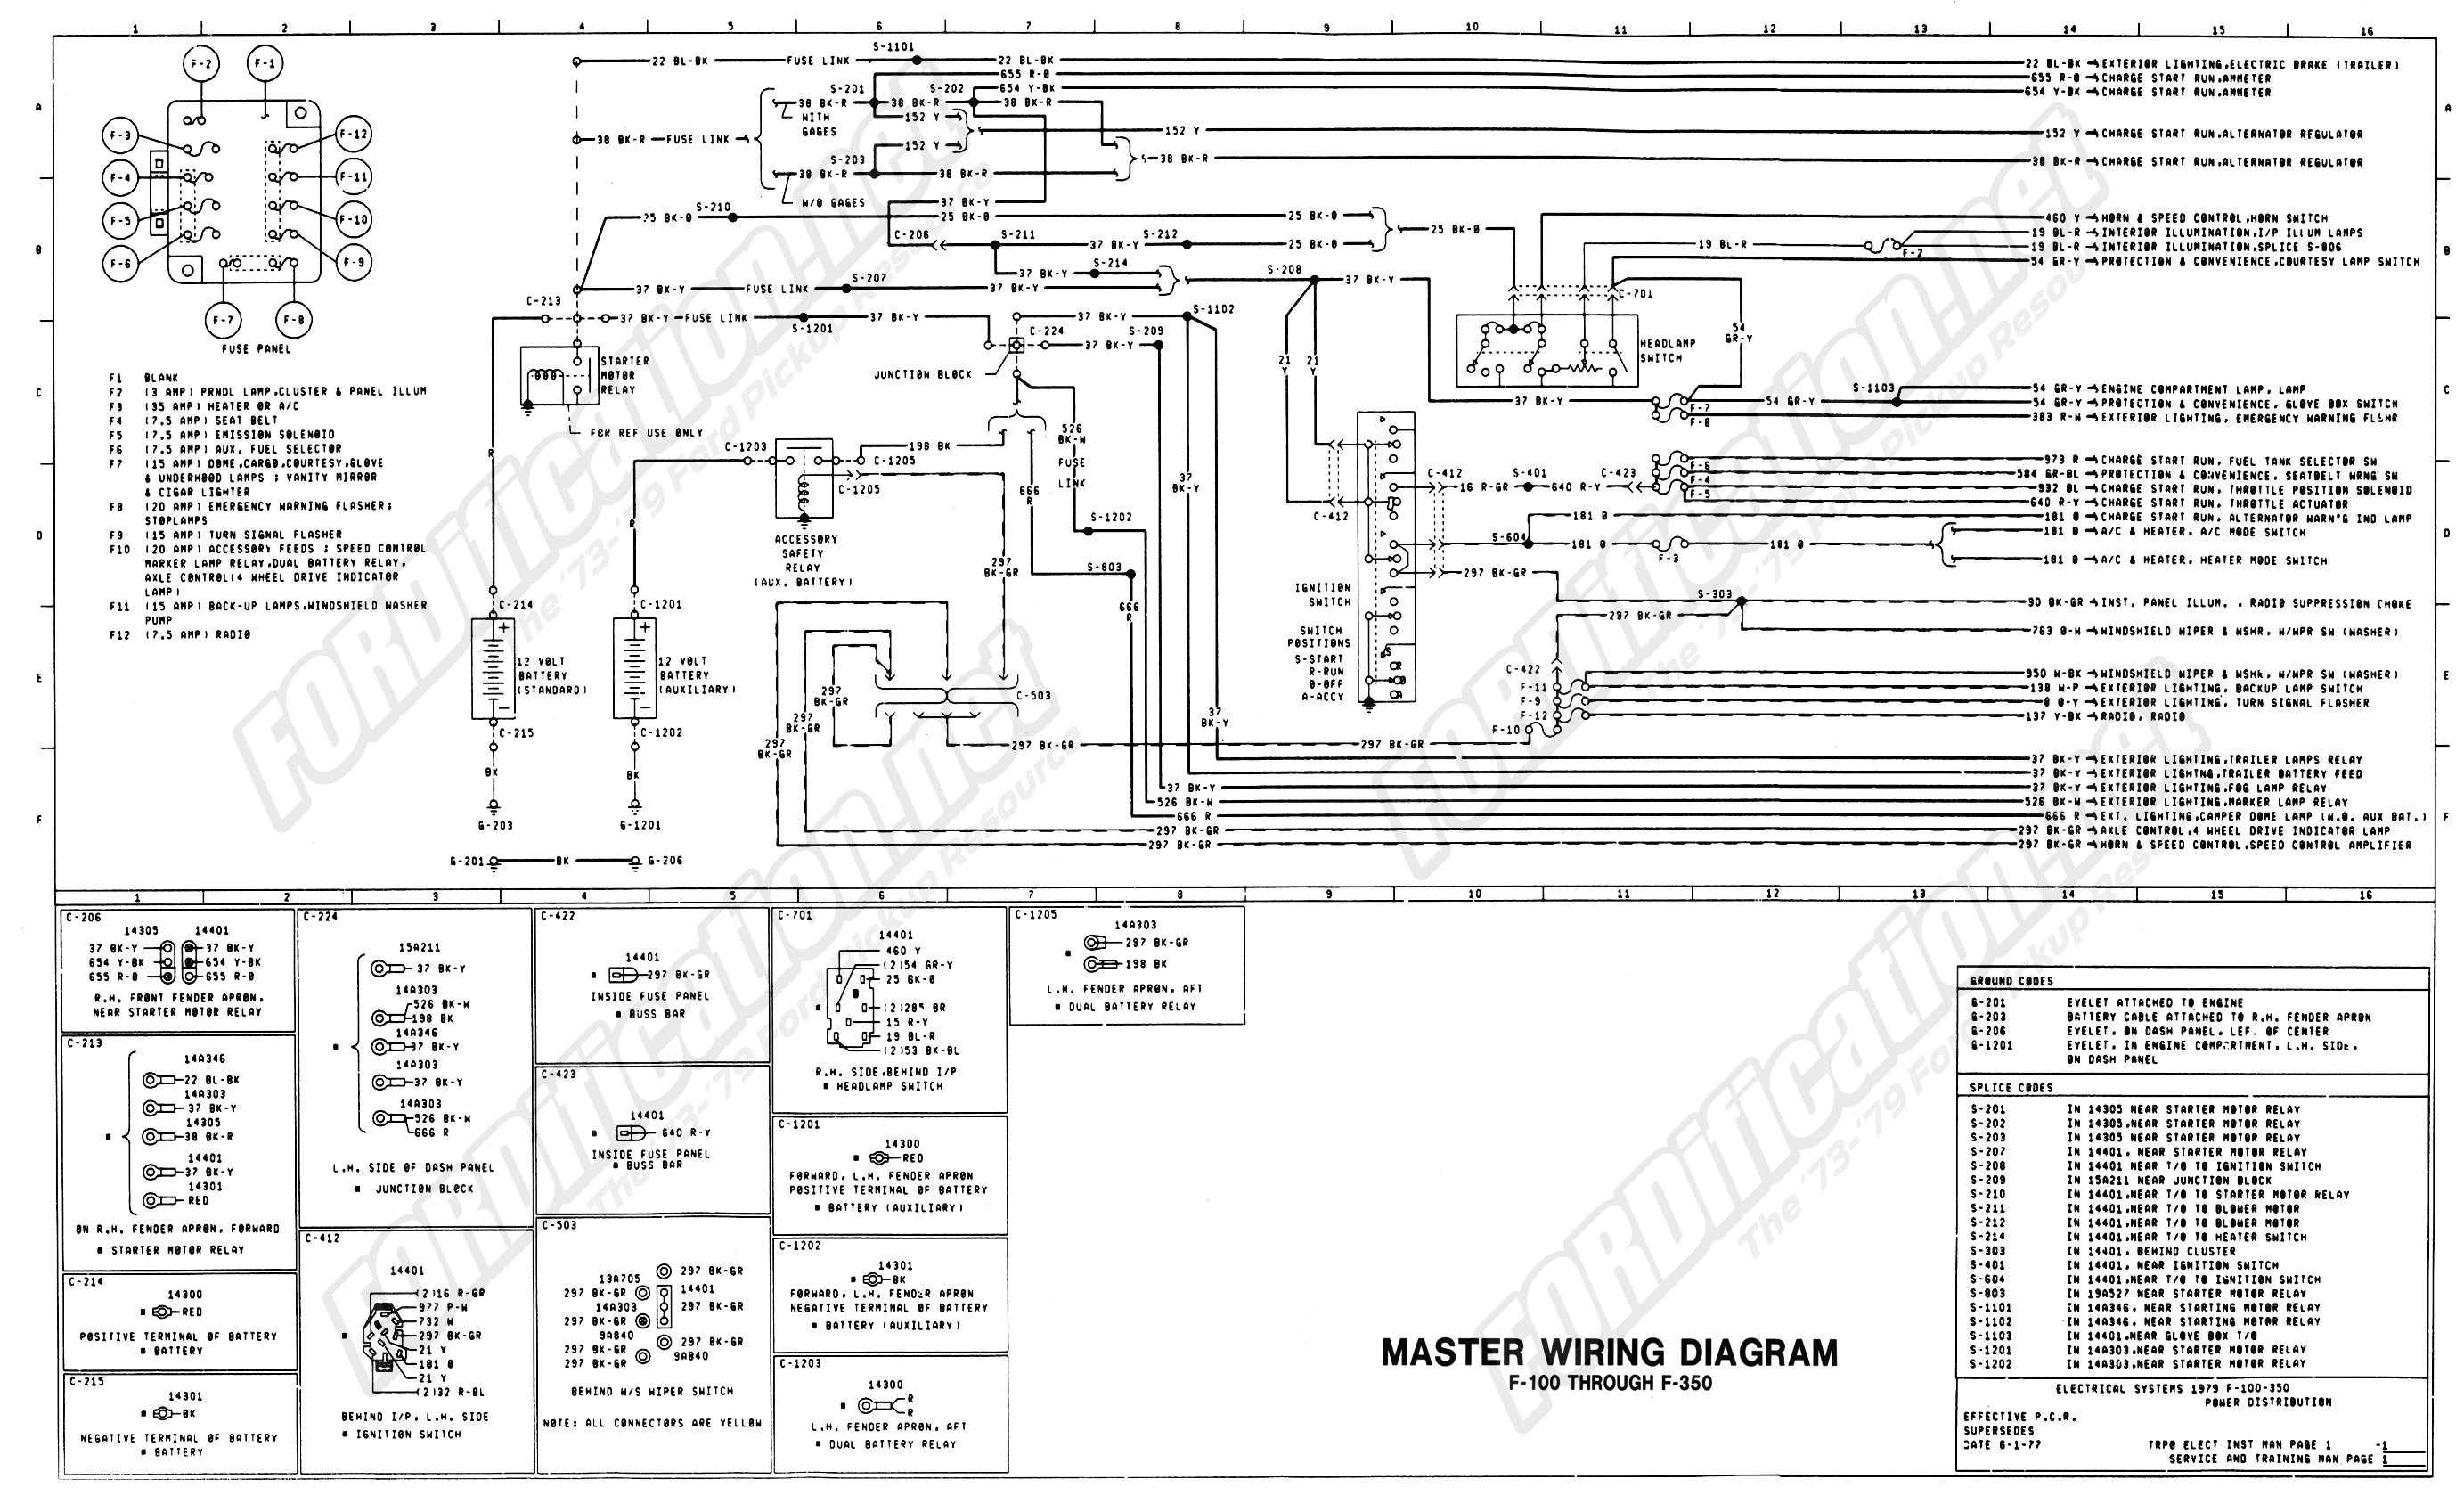 international truck wiring diagram